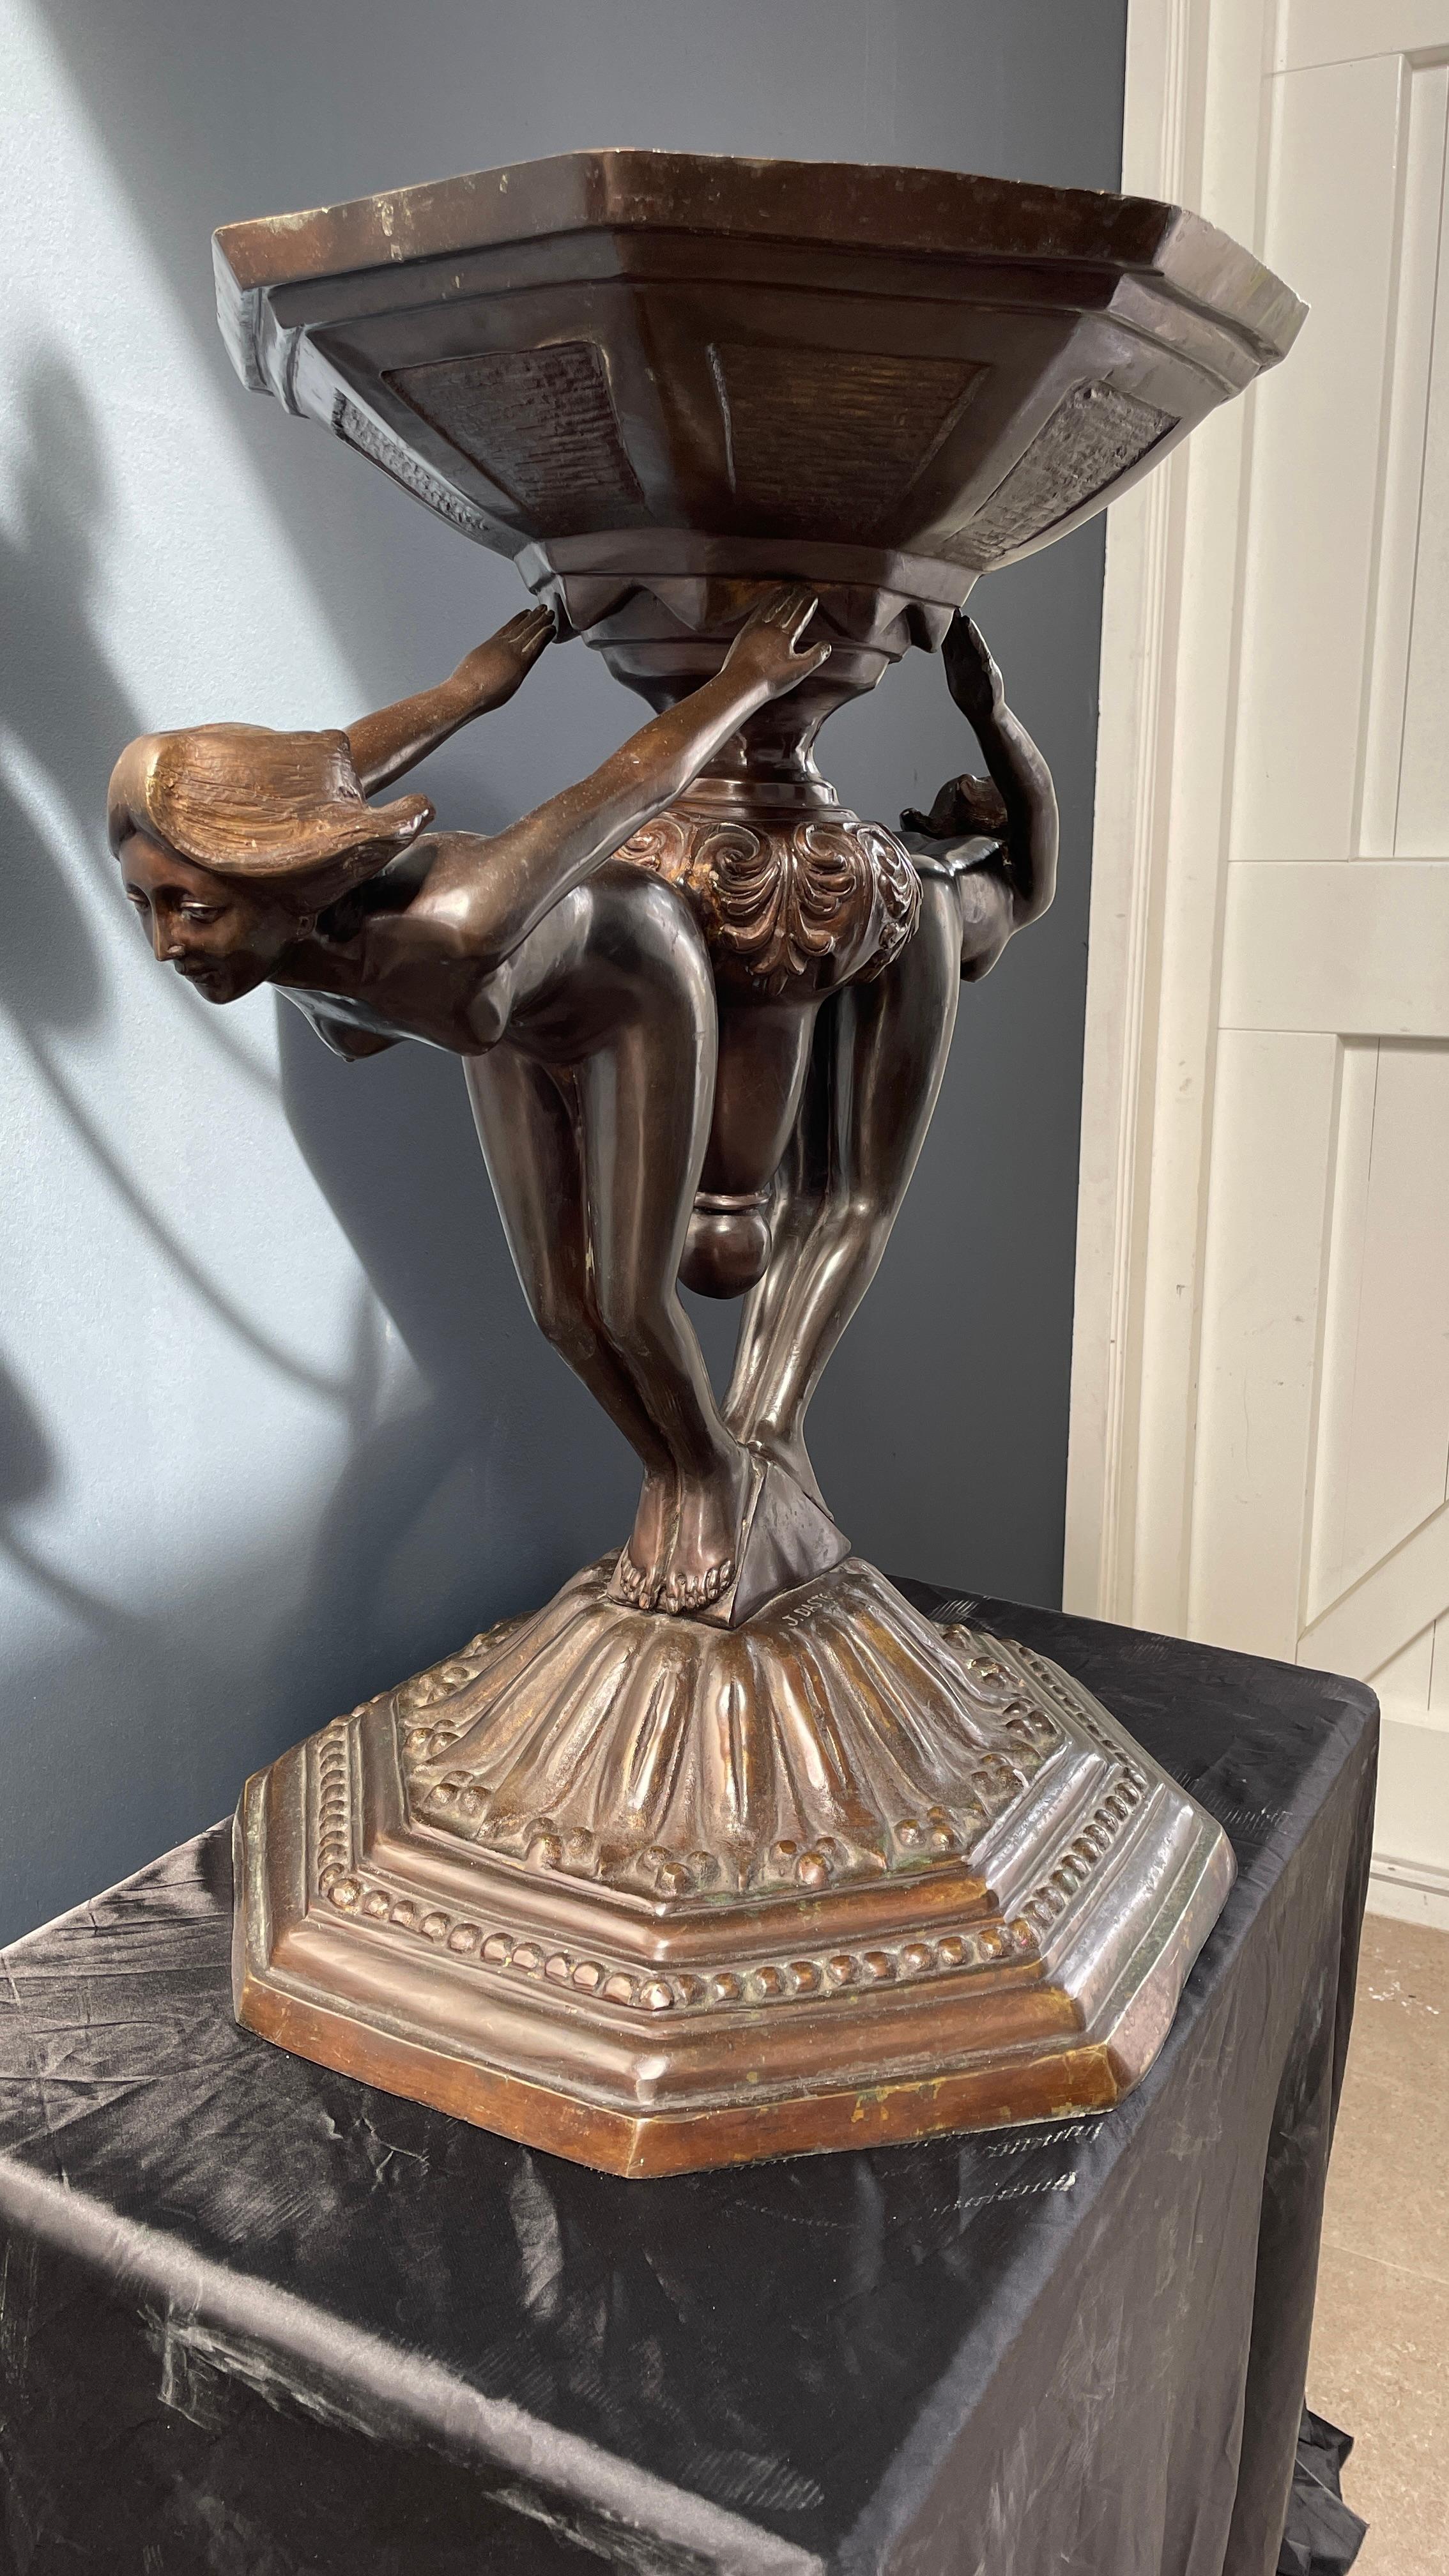 Bronzed Bronze Sculpture Bird Bath by Listed Artist Joseph 'Guiseppe' d'Aste, c. 1920's For Sale